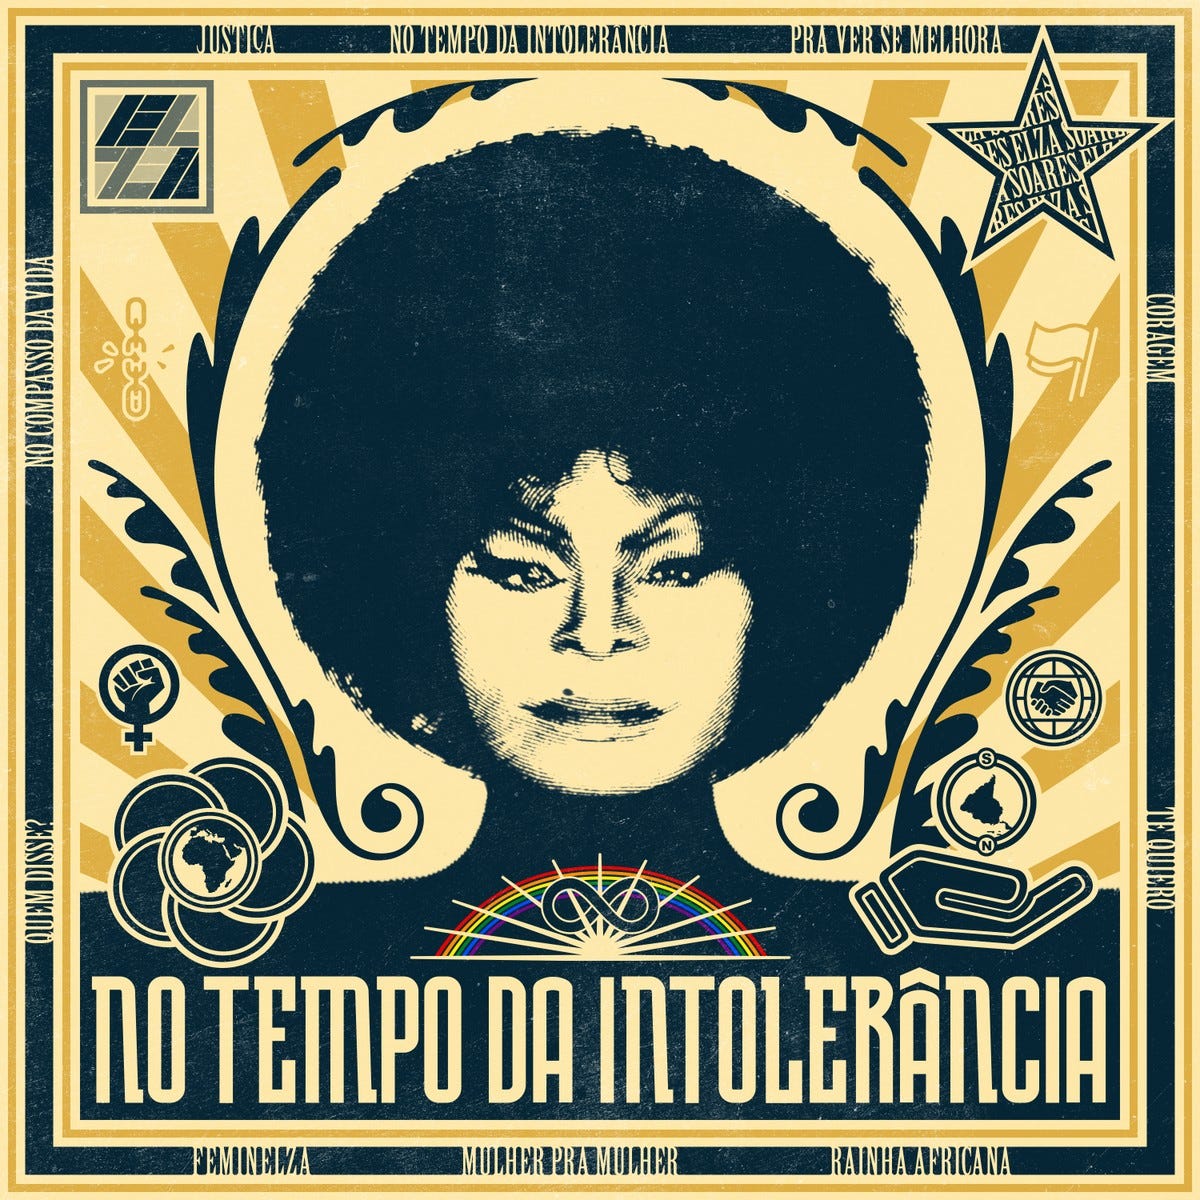 Elza Soares canta Pitty e Isabela Moraes no álbum póstumo feminista 'No  tempo da intolerância' | Blog do Mauro Ferreira | G1